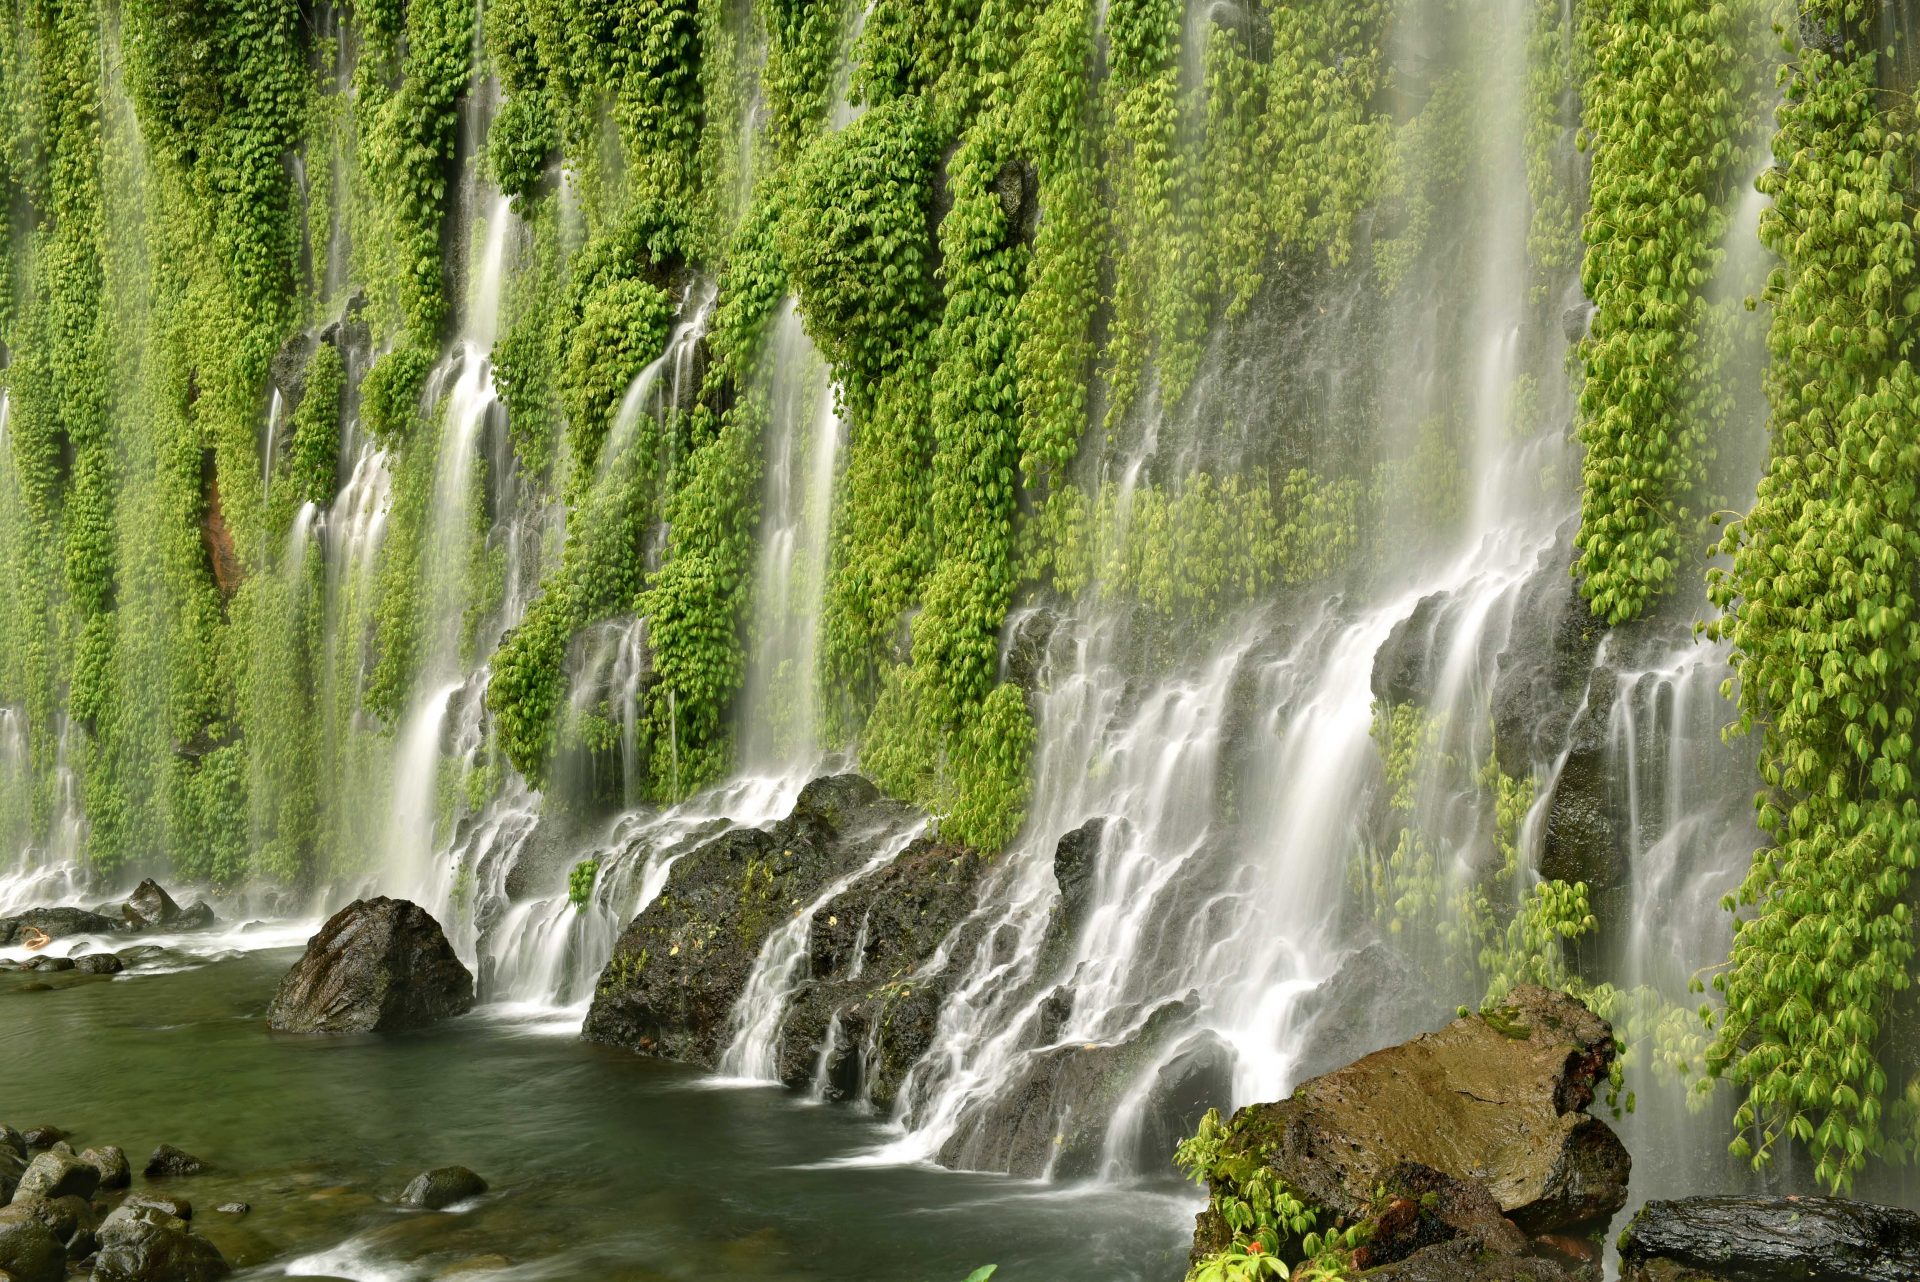 eco tourism destination in the philippines